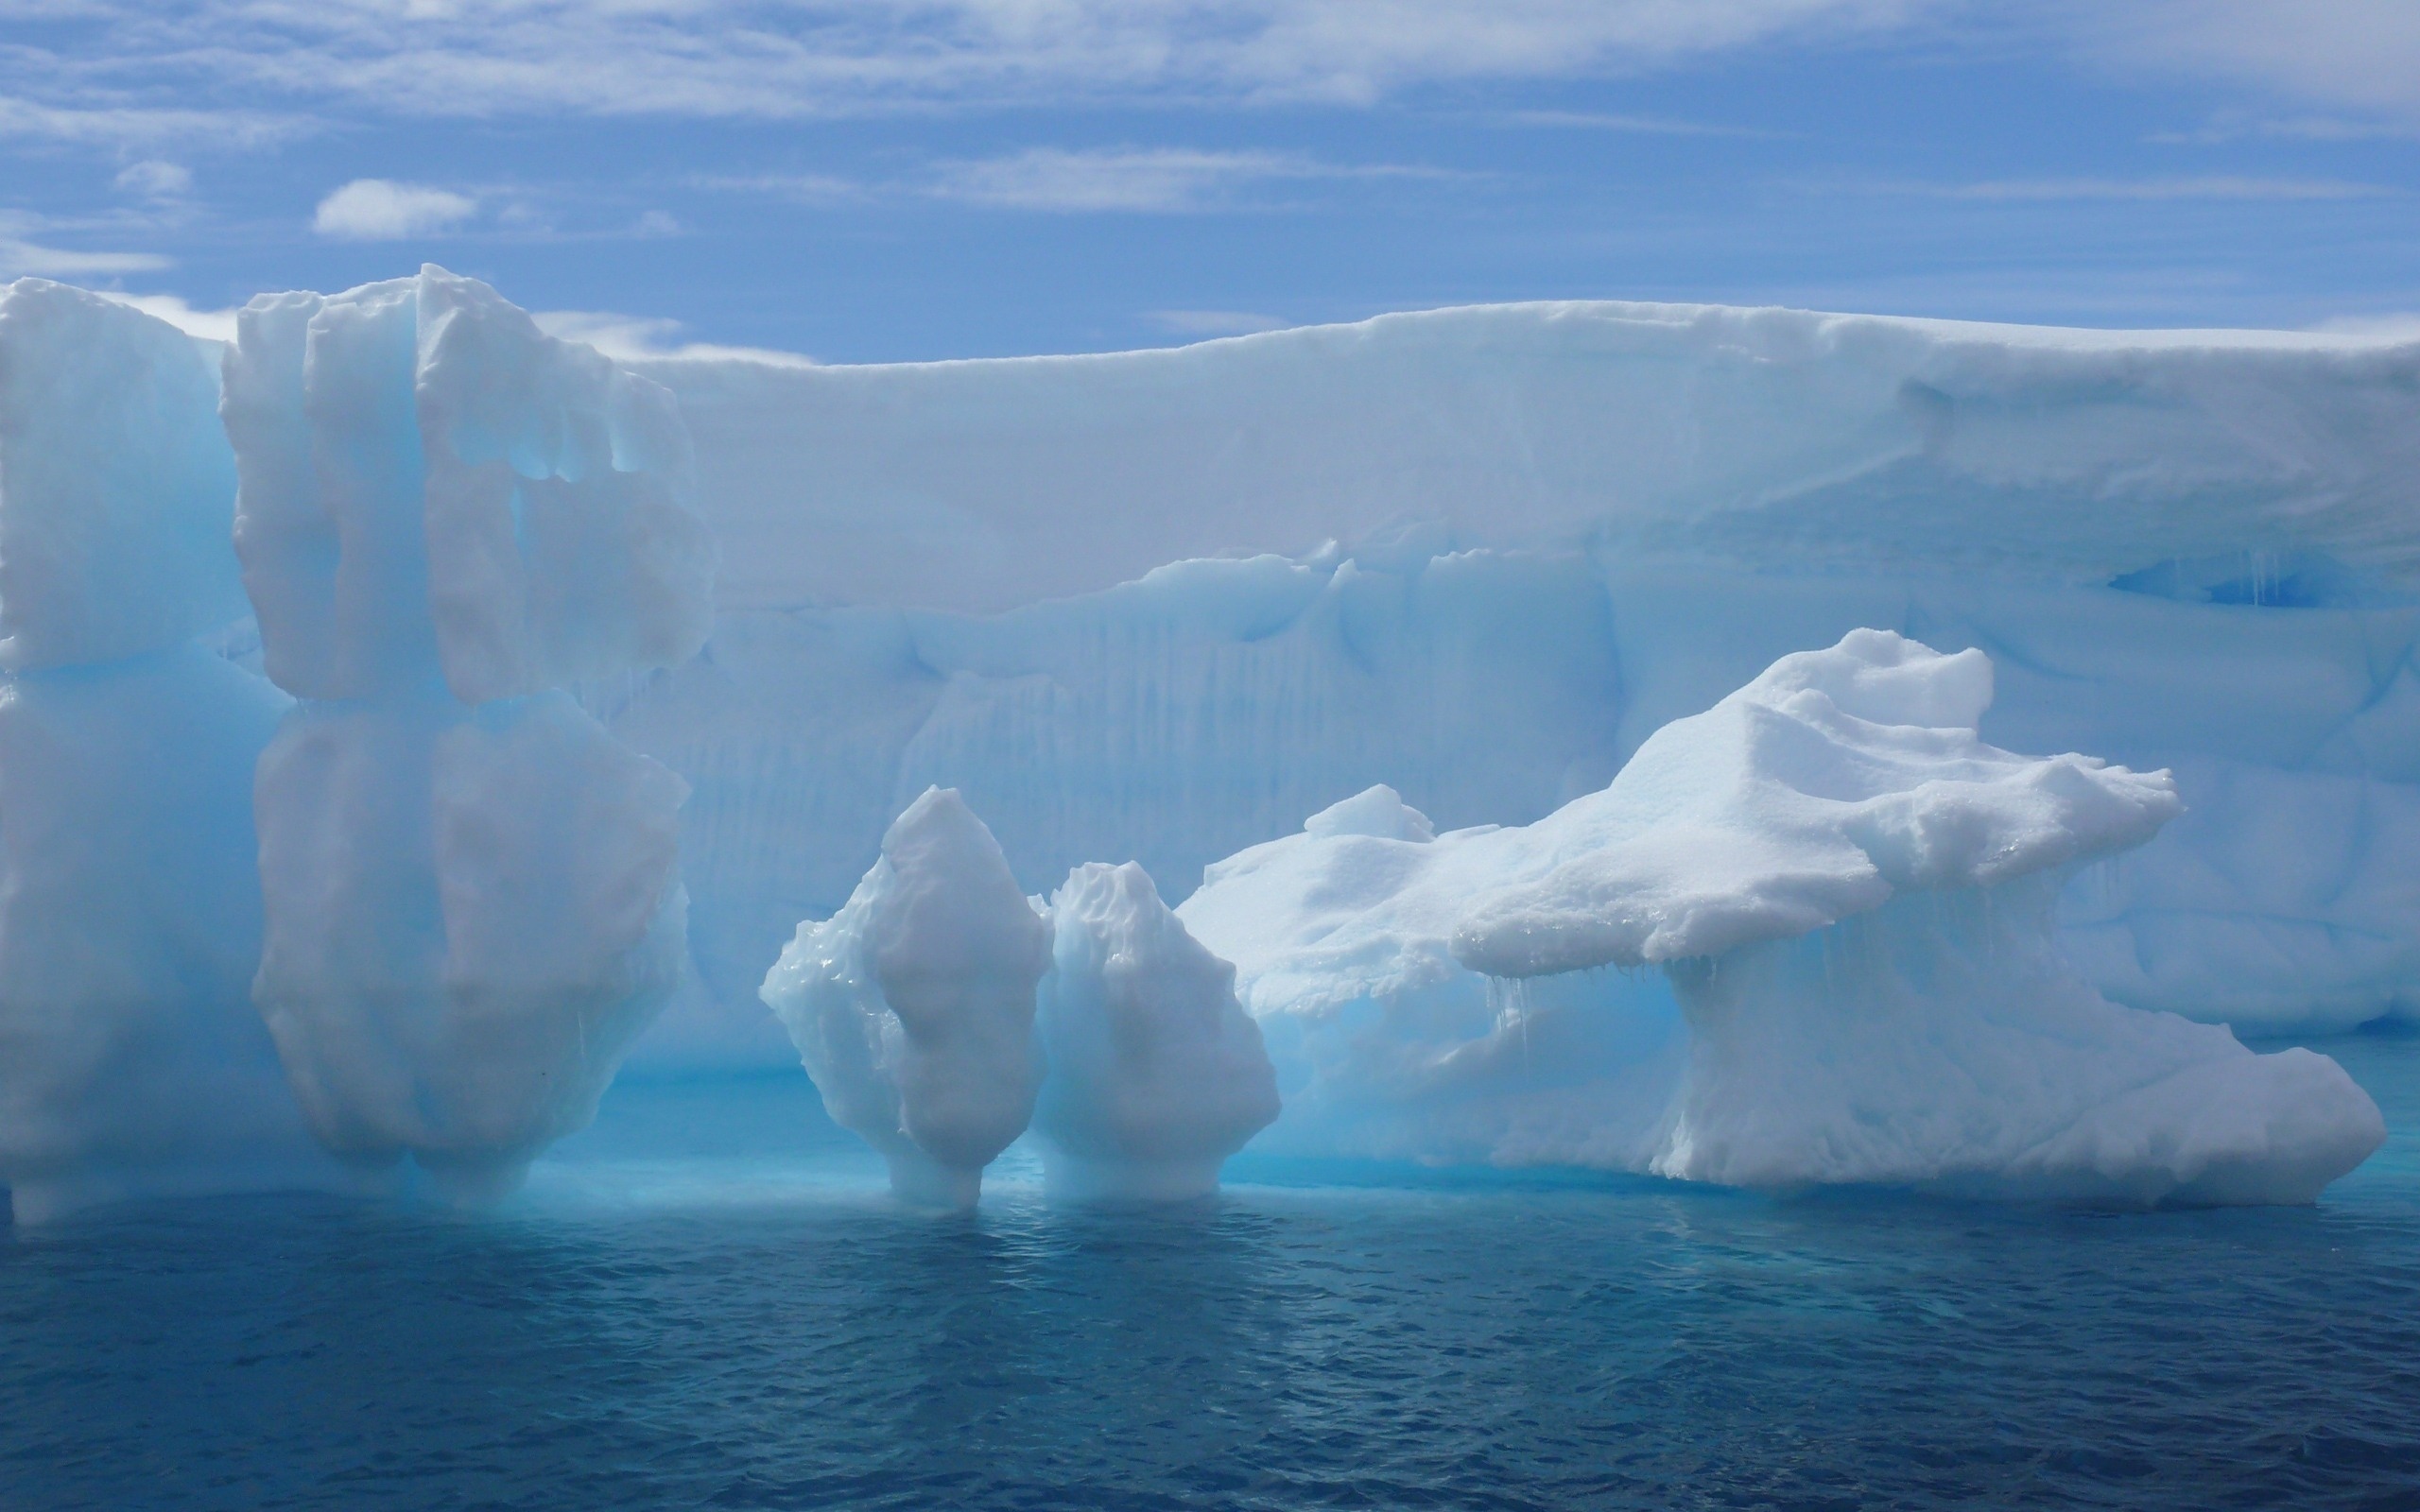 172712 descargar imagen tierra/naturaleza, iceberg: fondos de pantalla y protectores de pantalla gratis